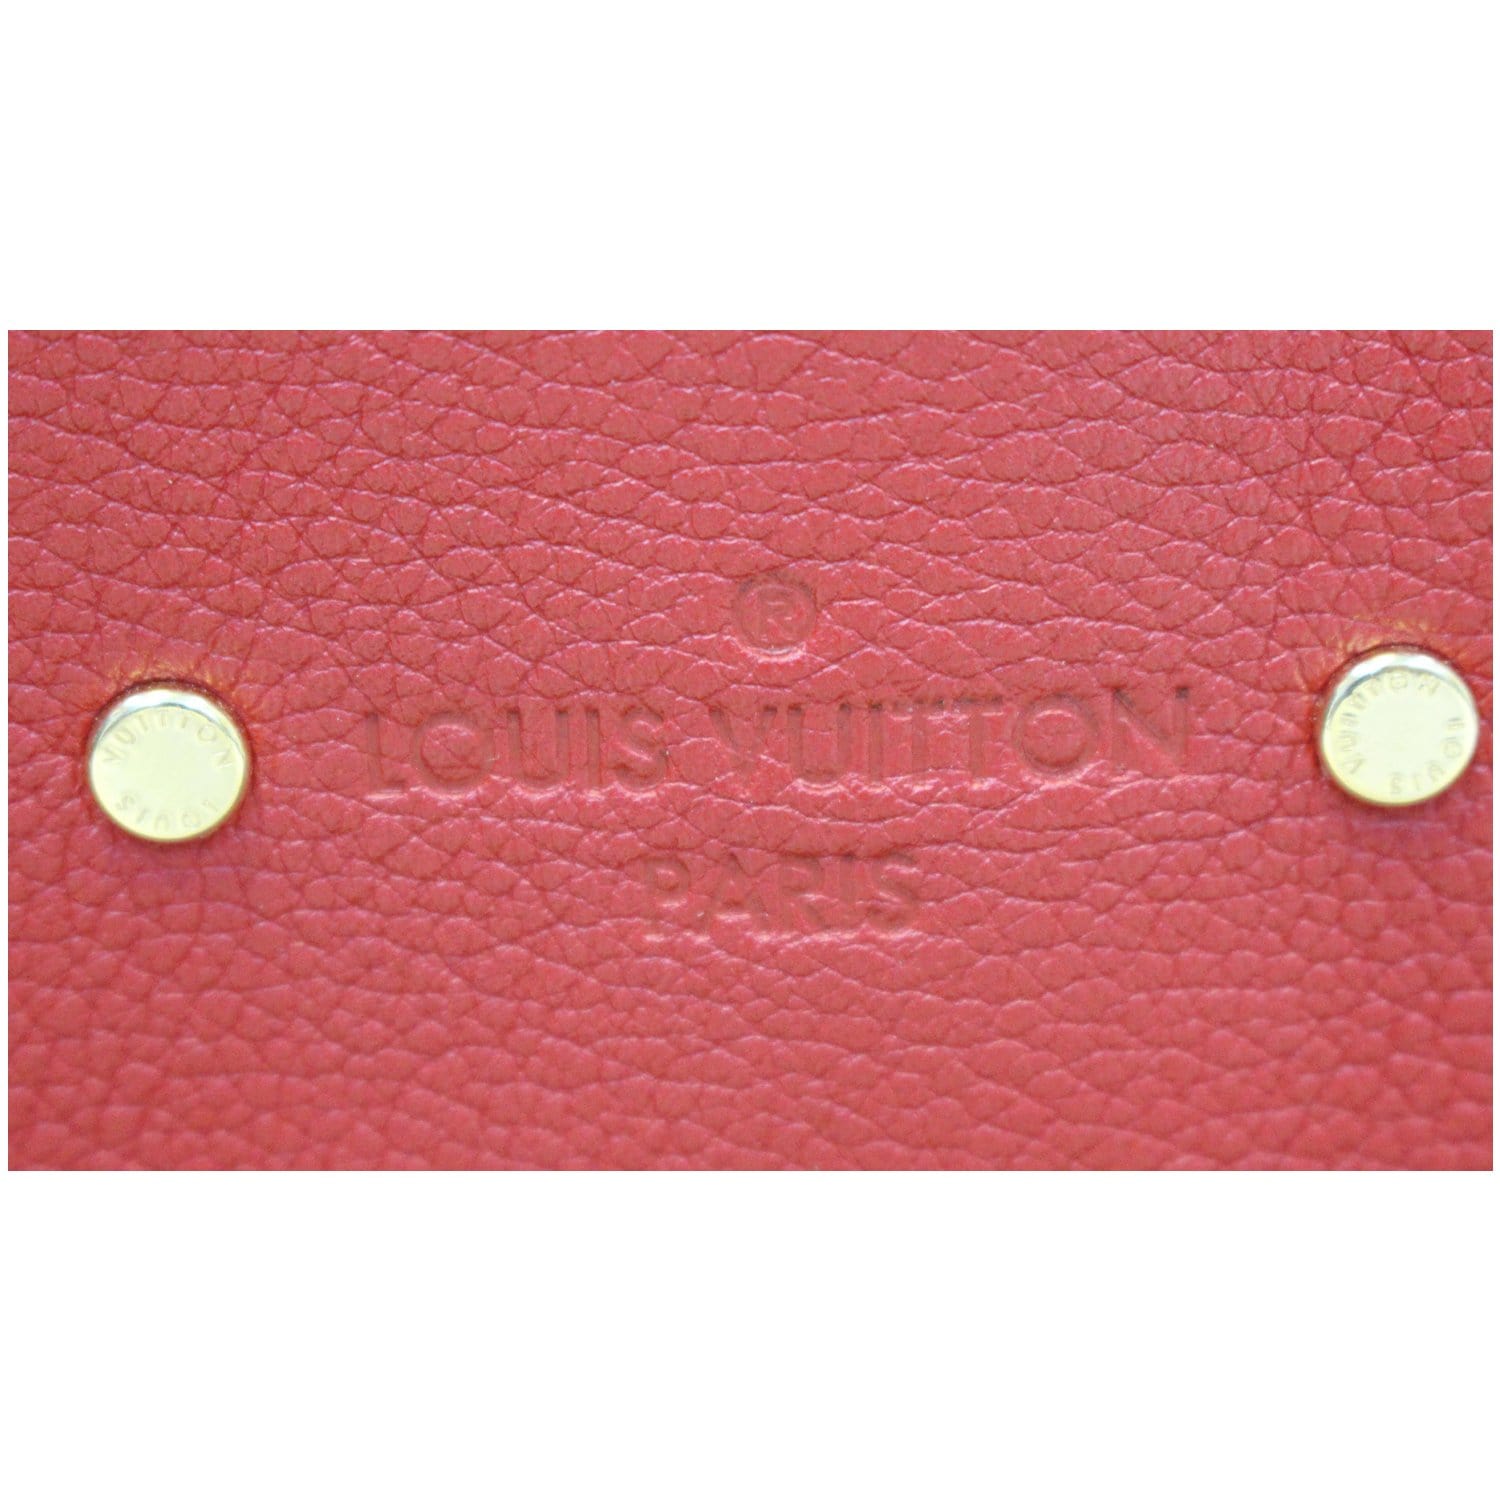 Louis Vuitton Cherry Monogram Canvas Pallas Chain Bag, myGemma, IT